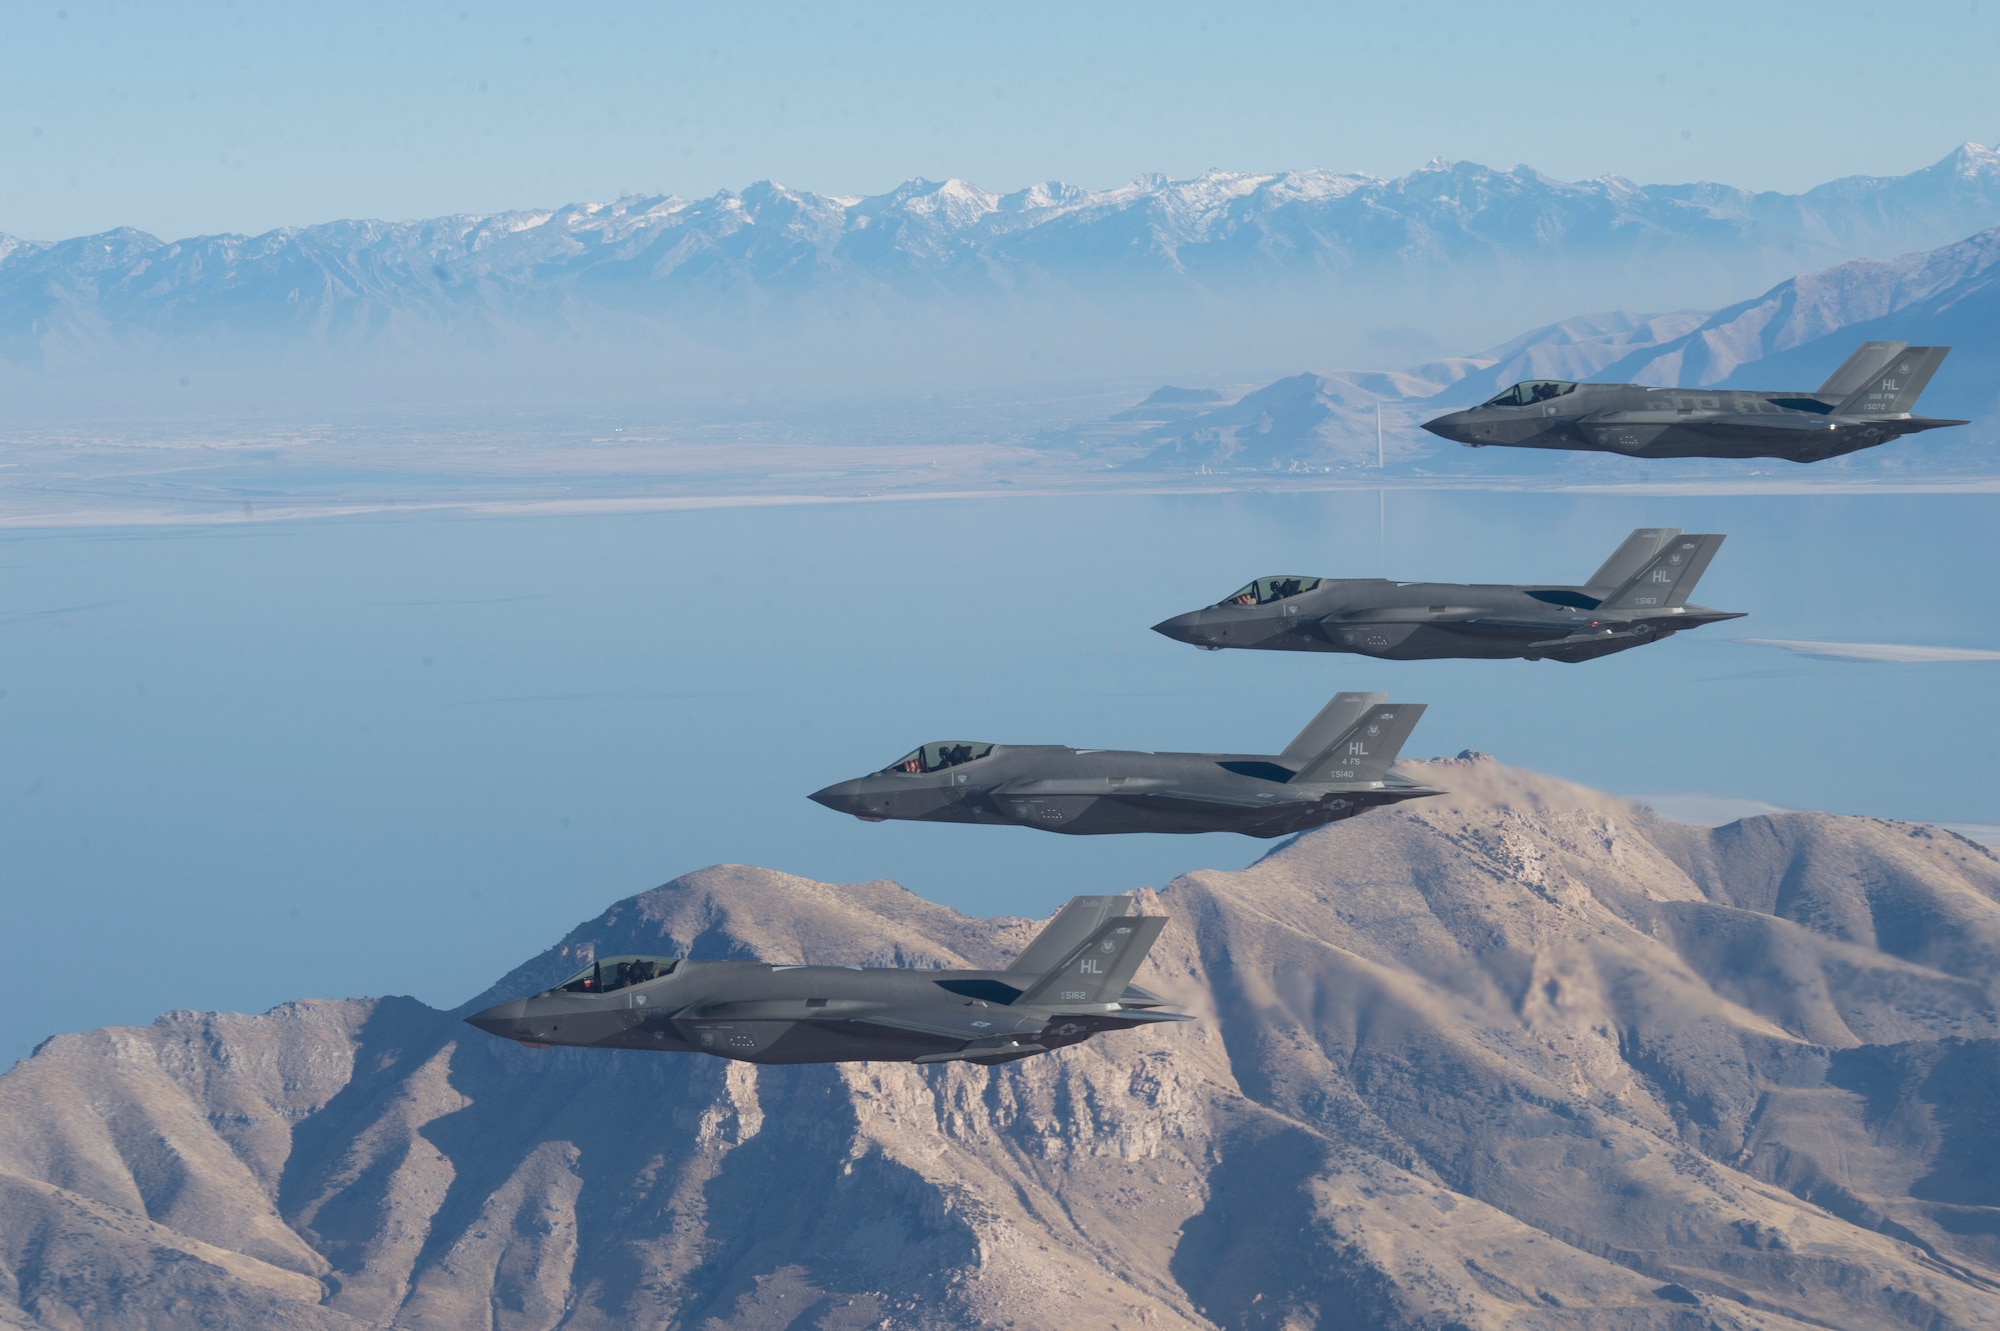 A formation of F-35 Lightning IIs